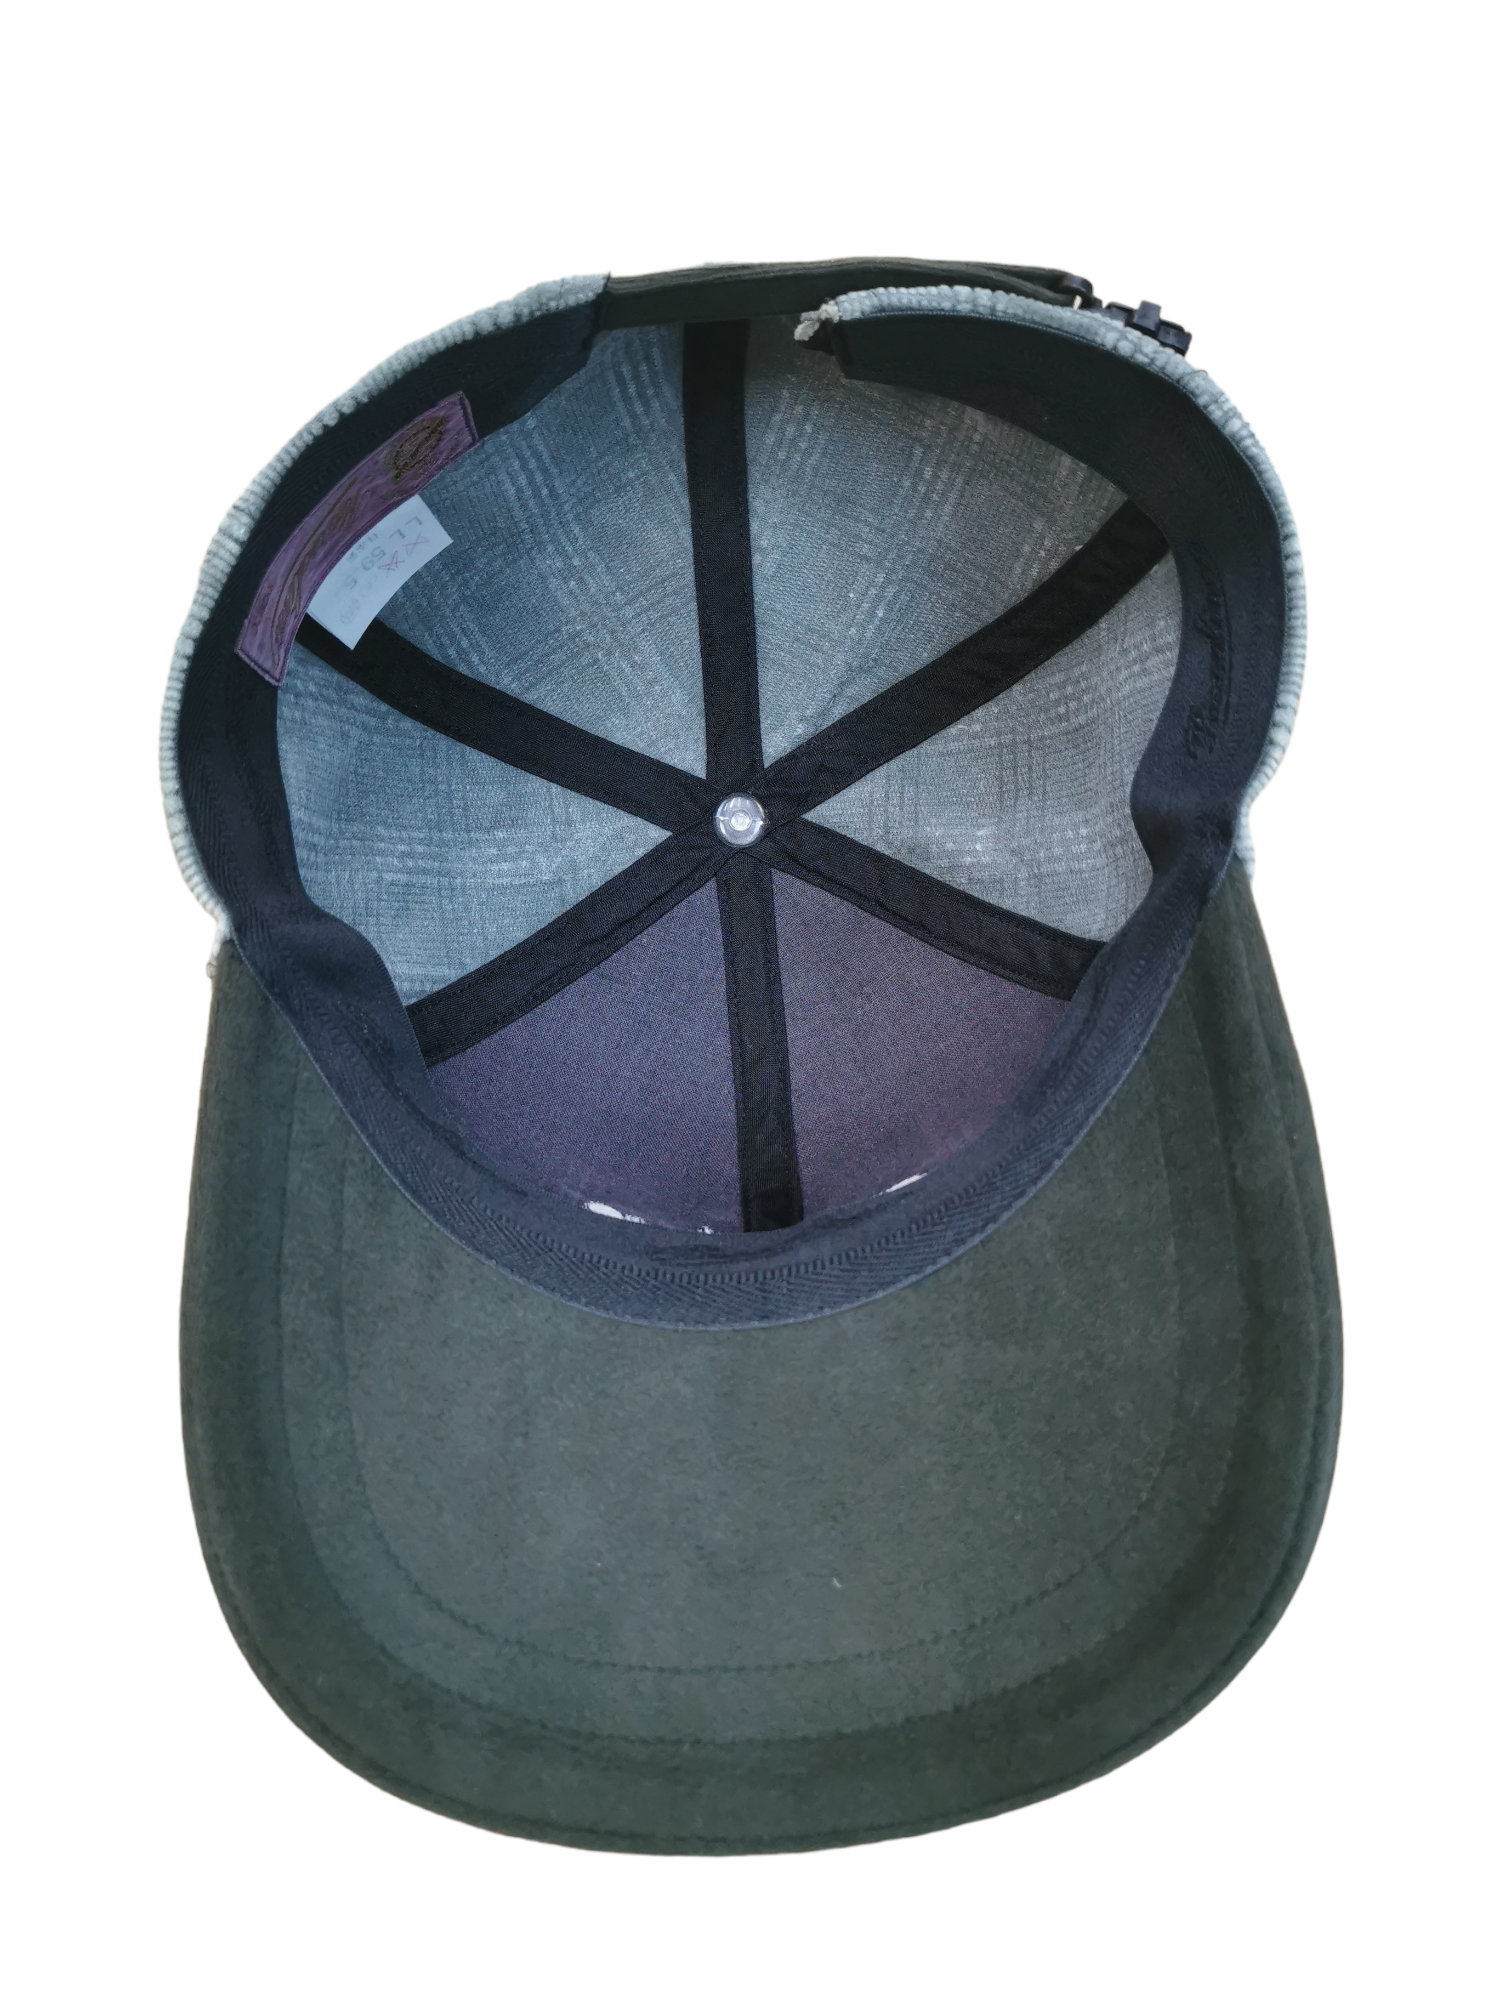 Borsalino - VINTAGE BORSALINO LUXURY DESIGNER HAT CAP - 7